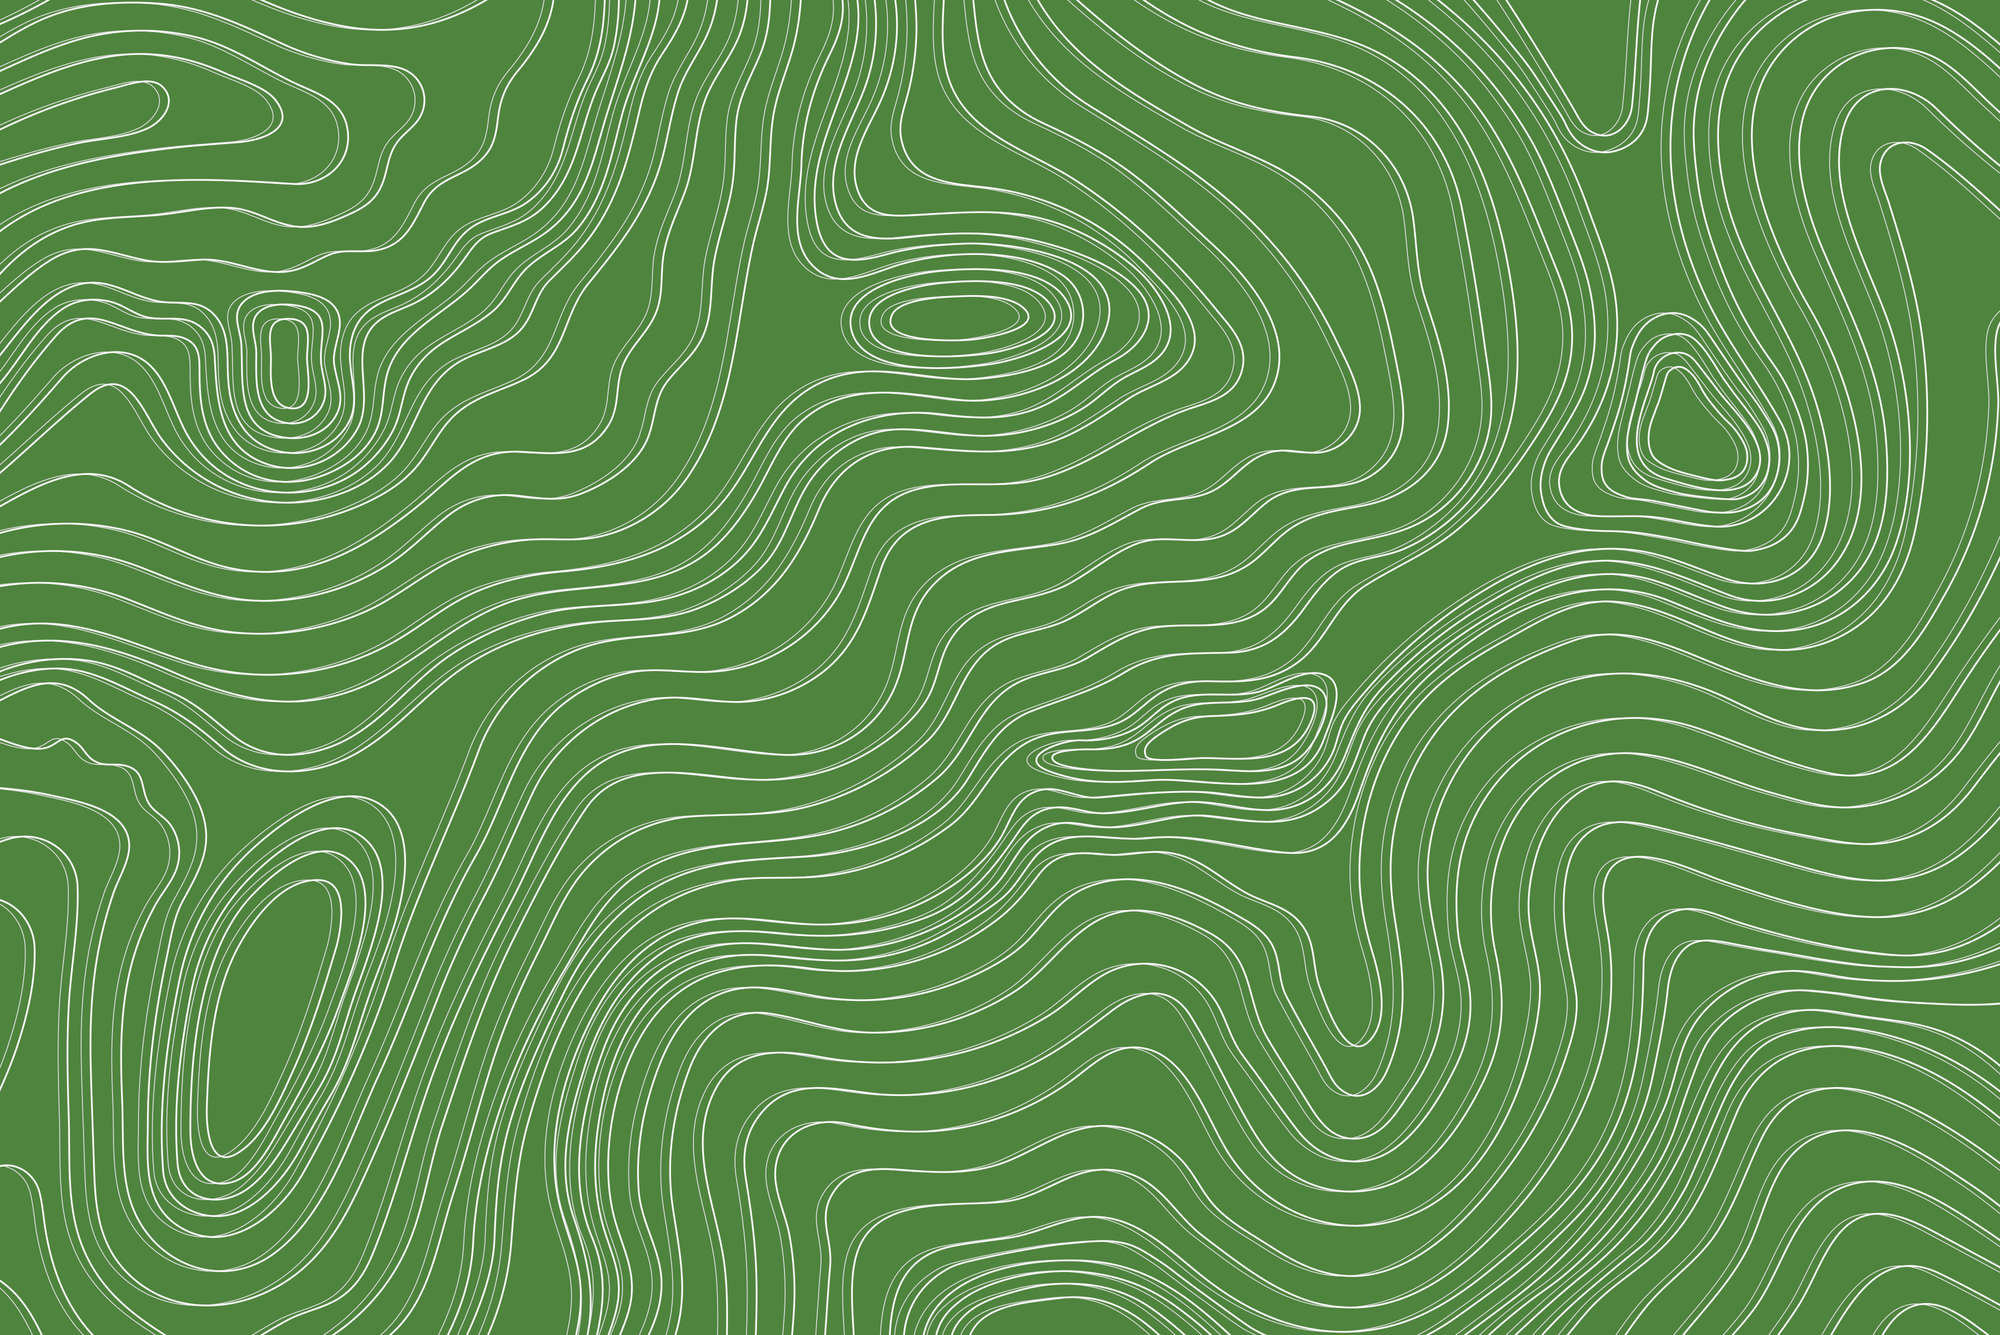             Designbehang golven en cirkels patroon groen op structuurvlies
        